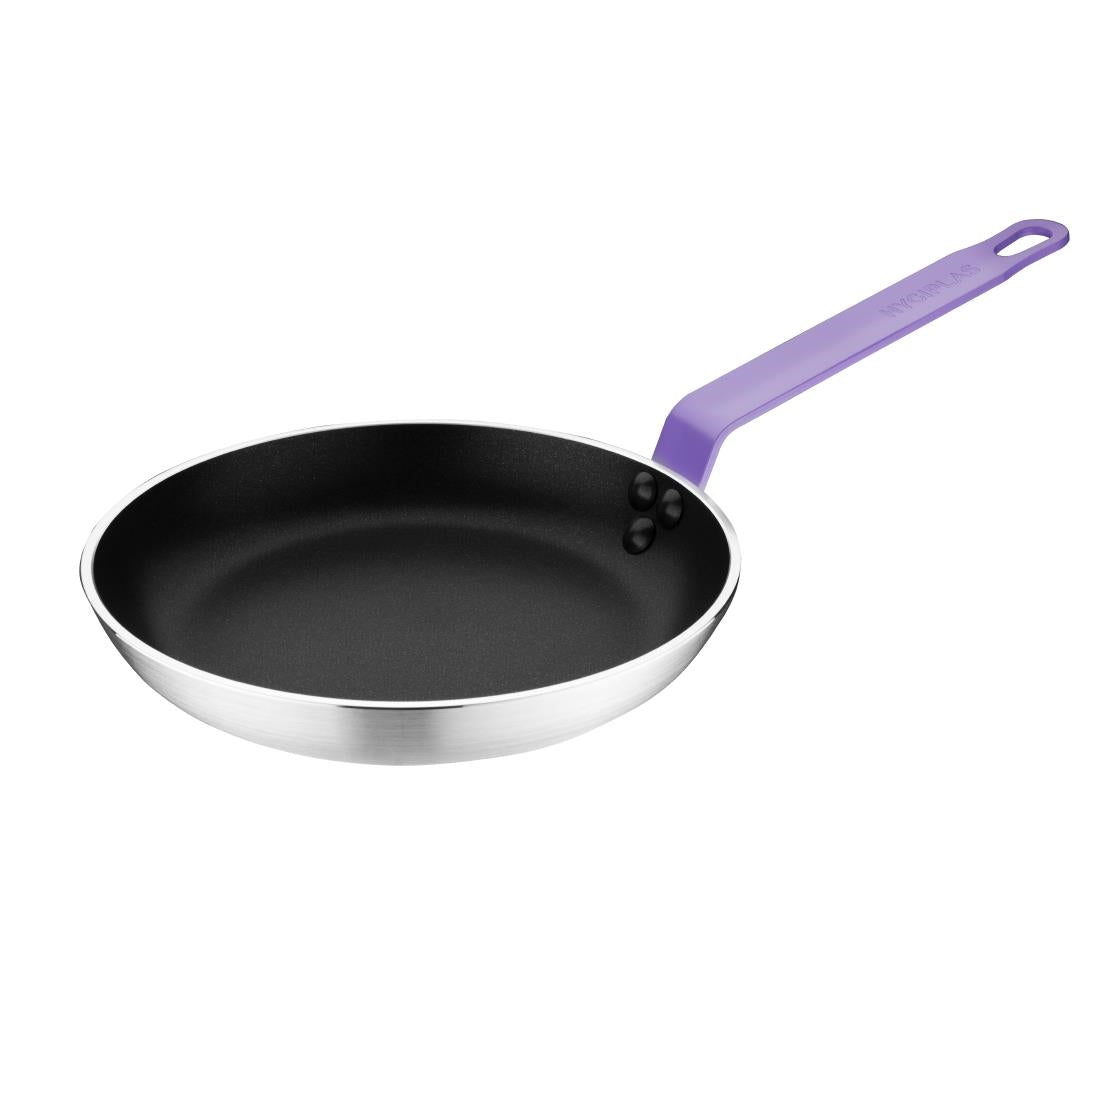 Hygiplas Aluminium Non-Stick Teflon Platinum Plus Frying Pan with Purple Handle 20cm